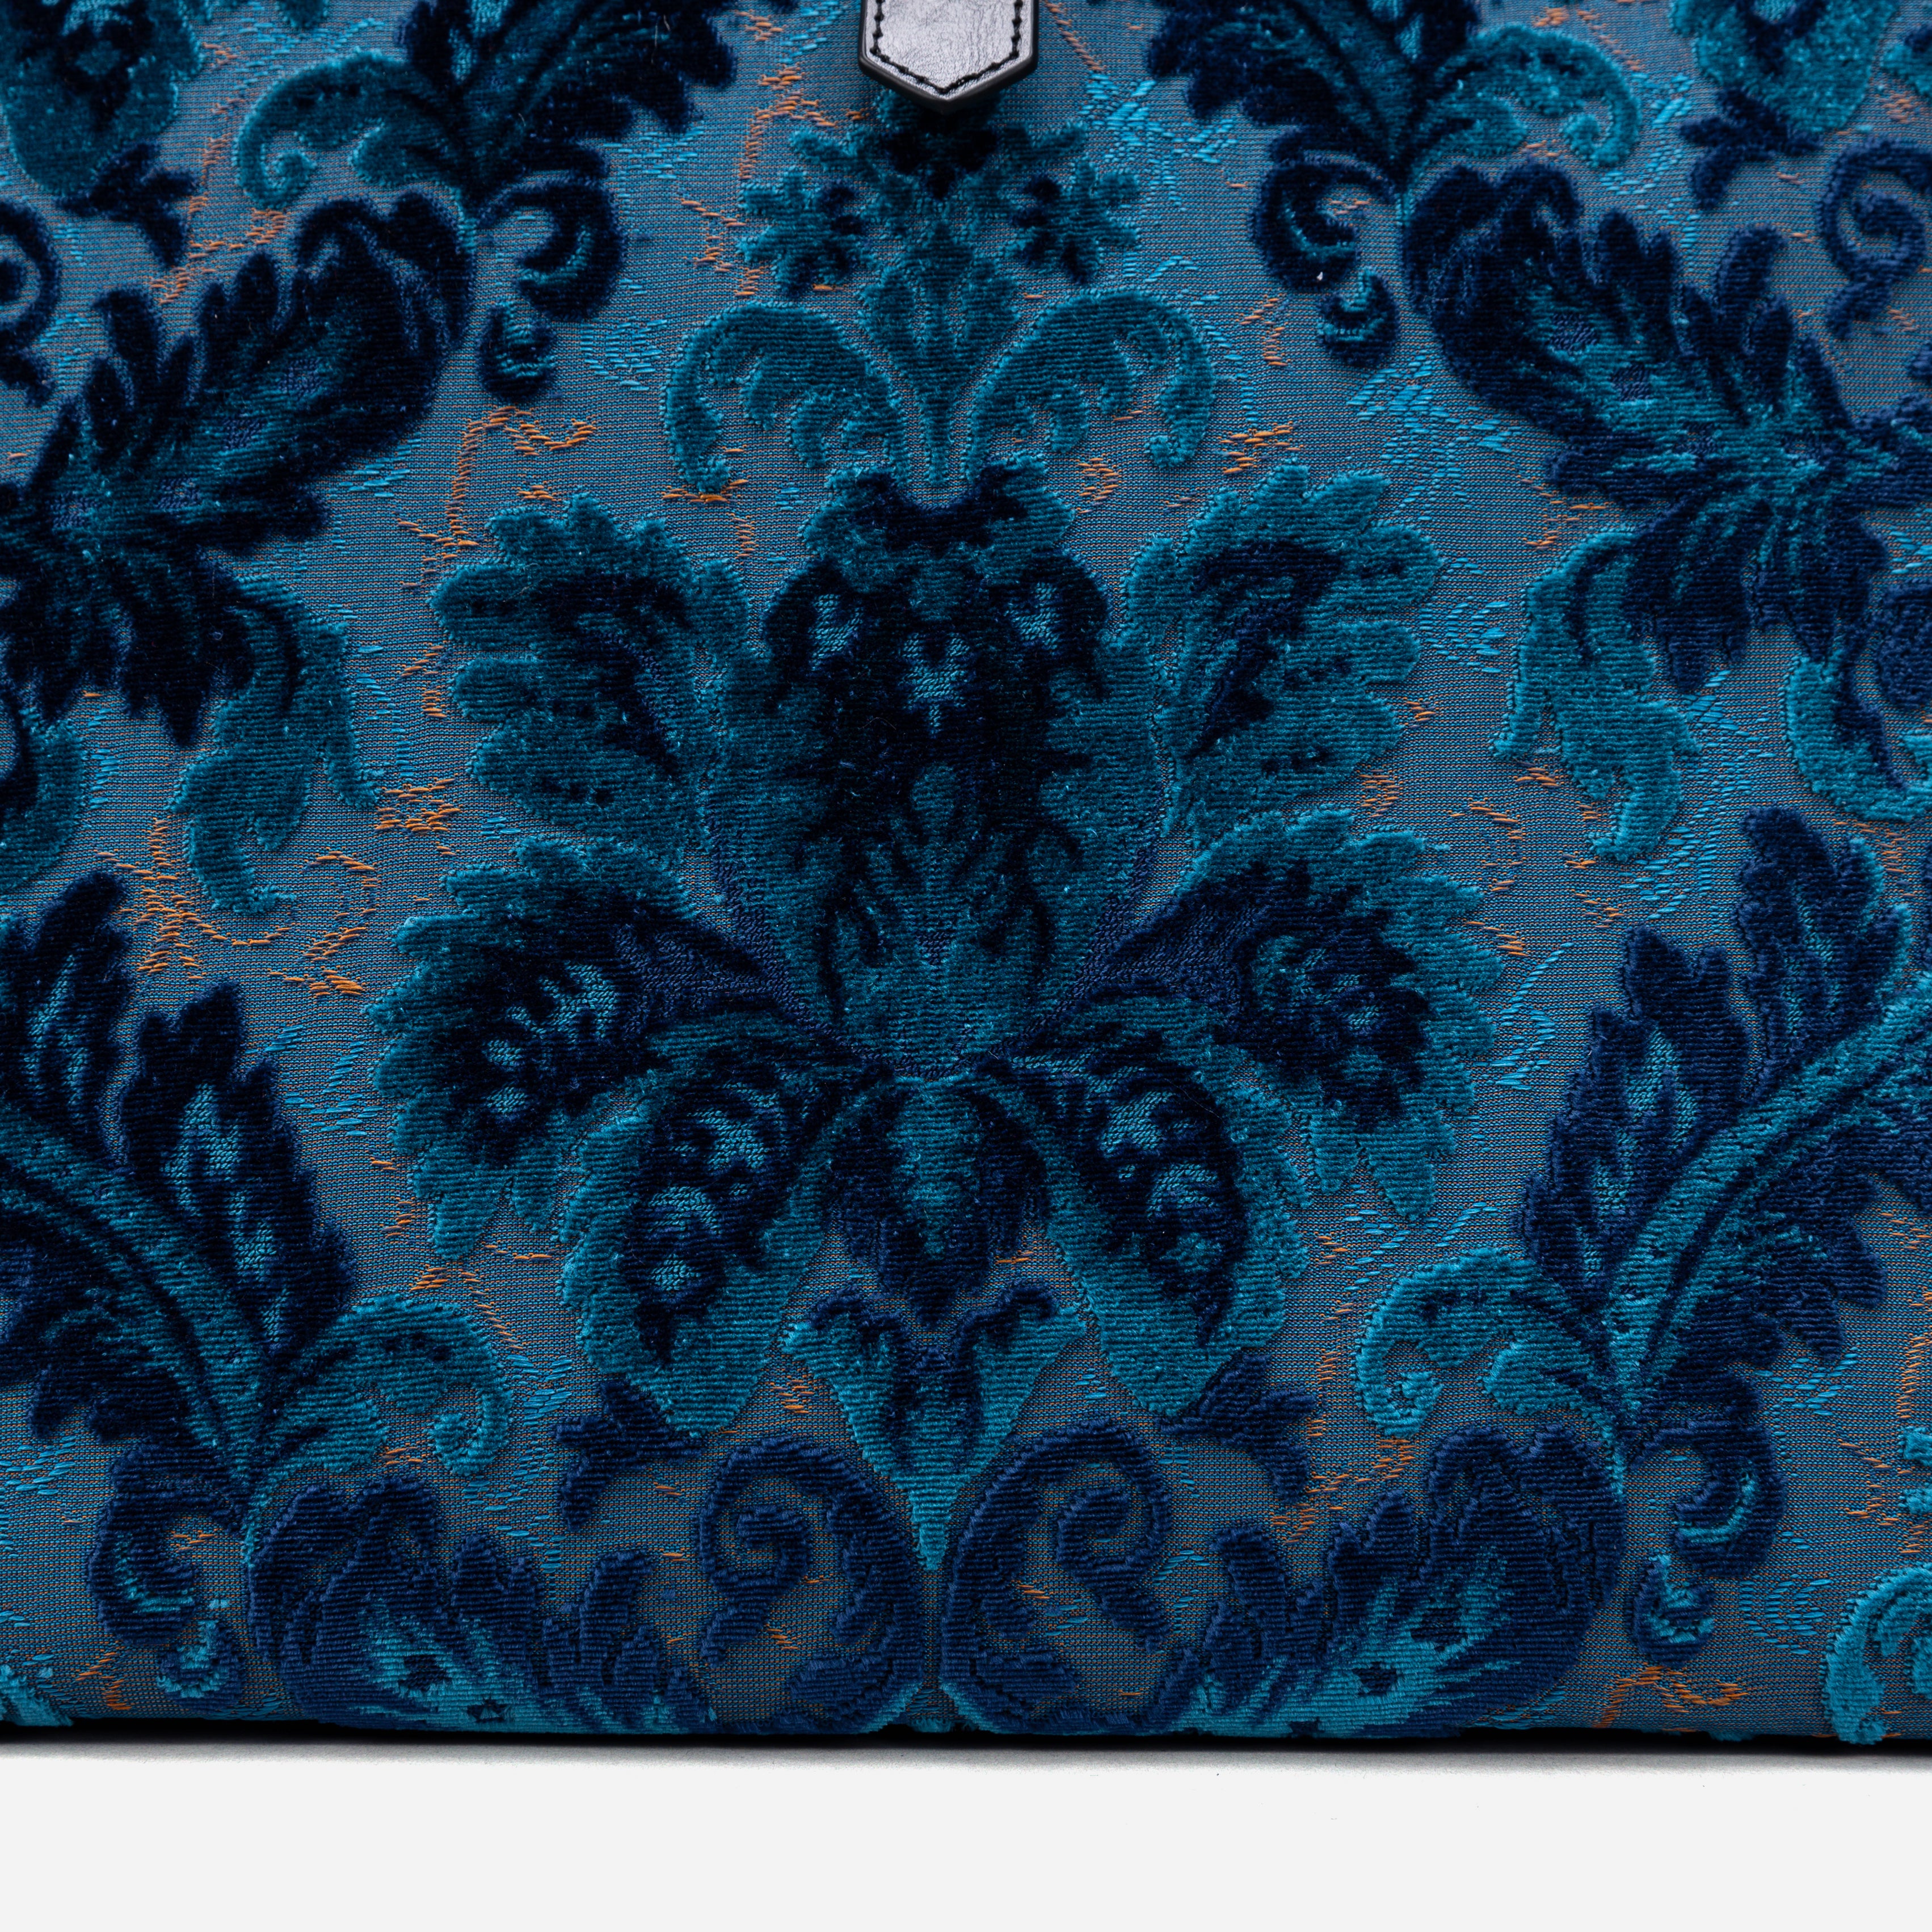 Mary Poppins Carpetbag Revival aqua weekender pattern